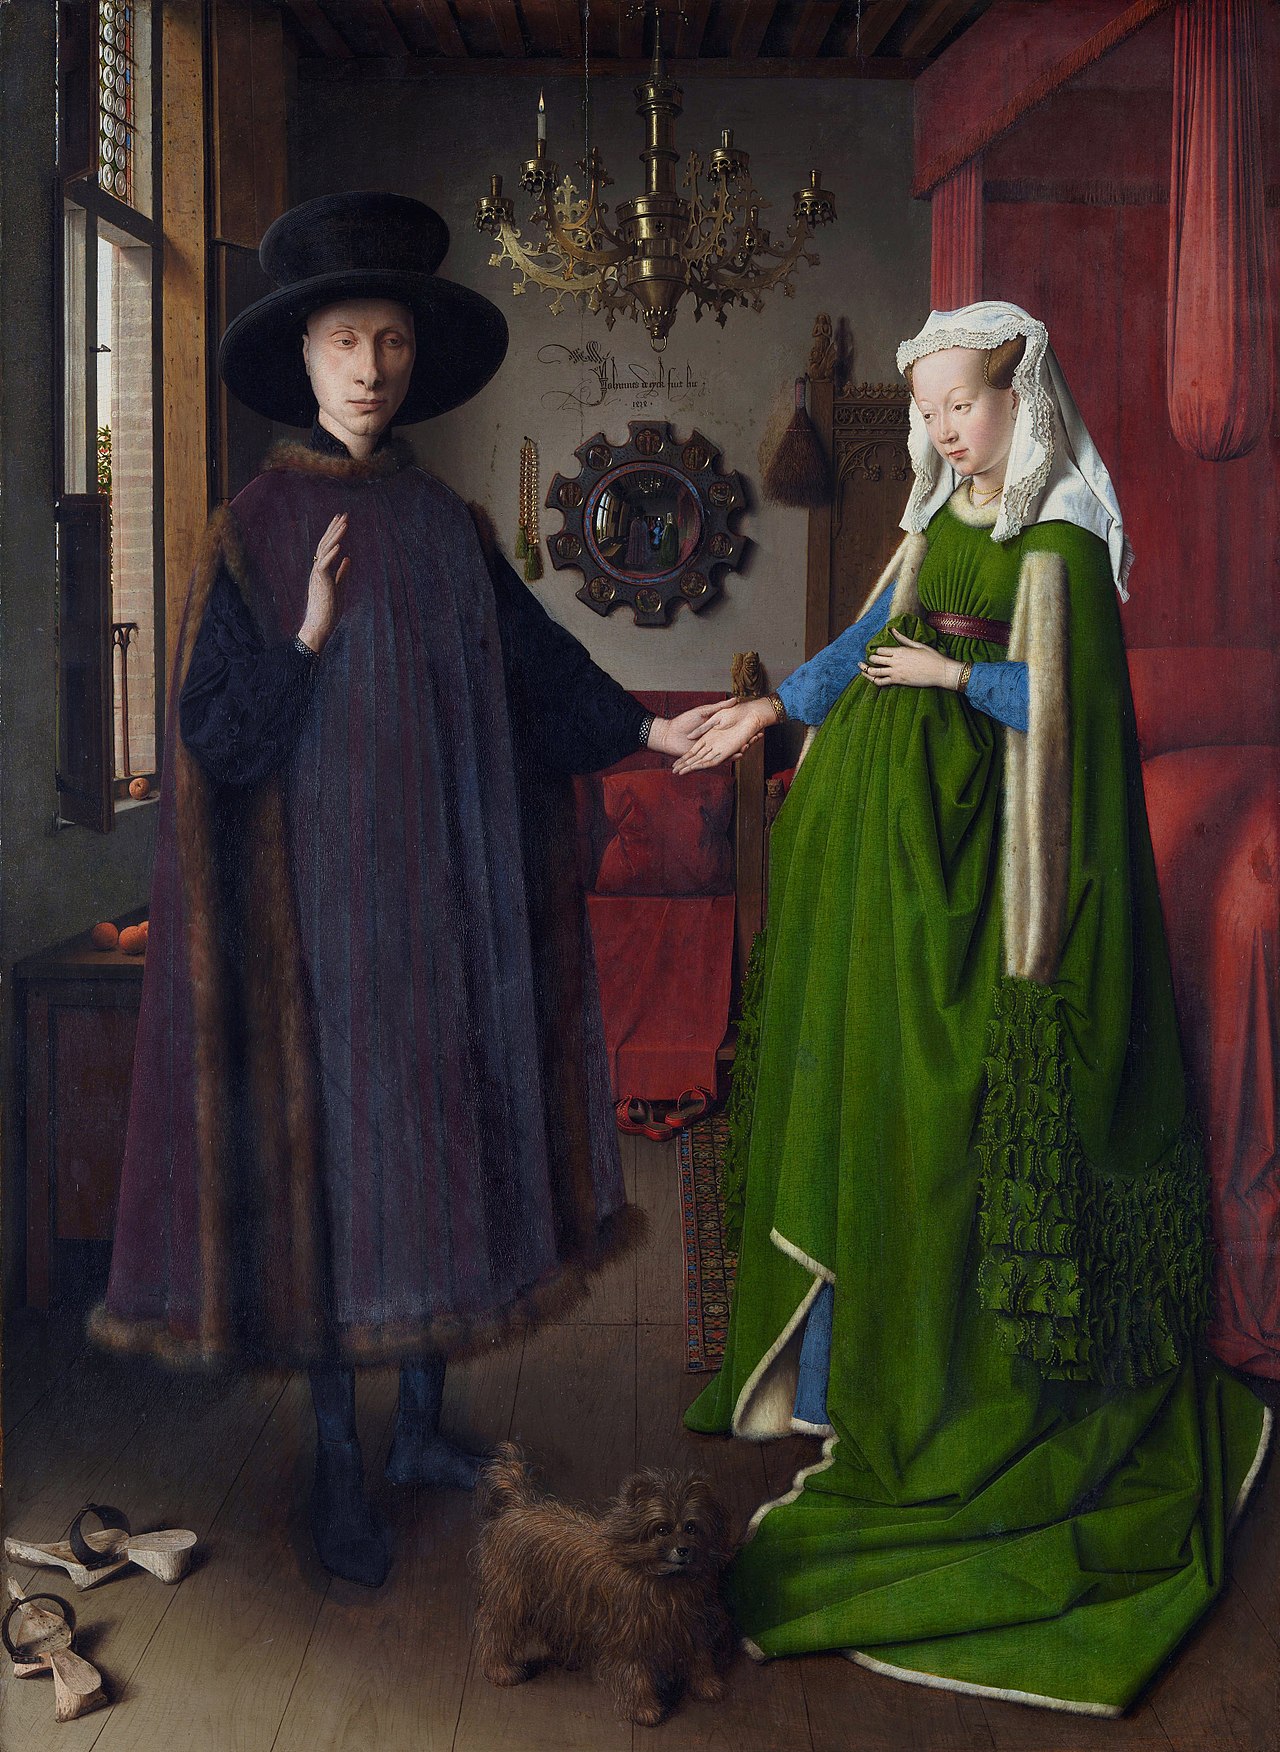 The original The Arnolfini Portrait by Jan van Eyck